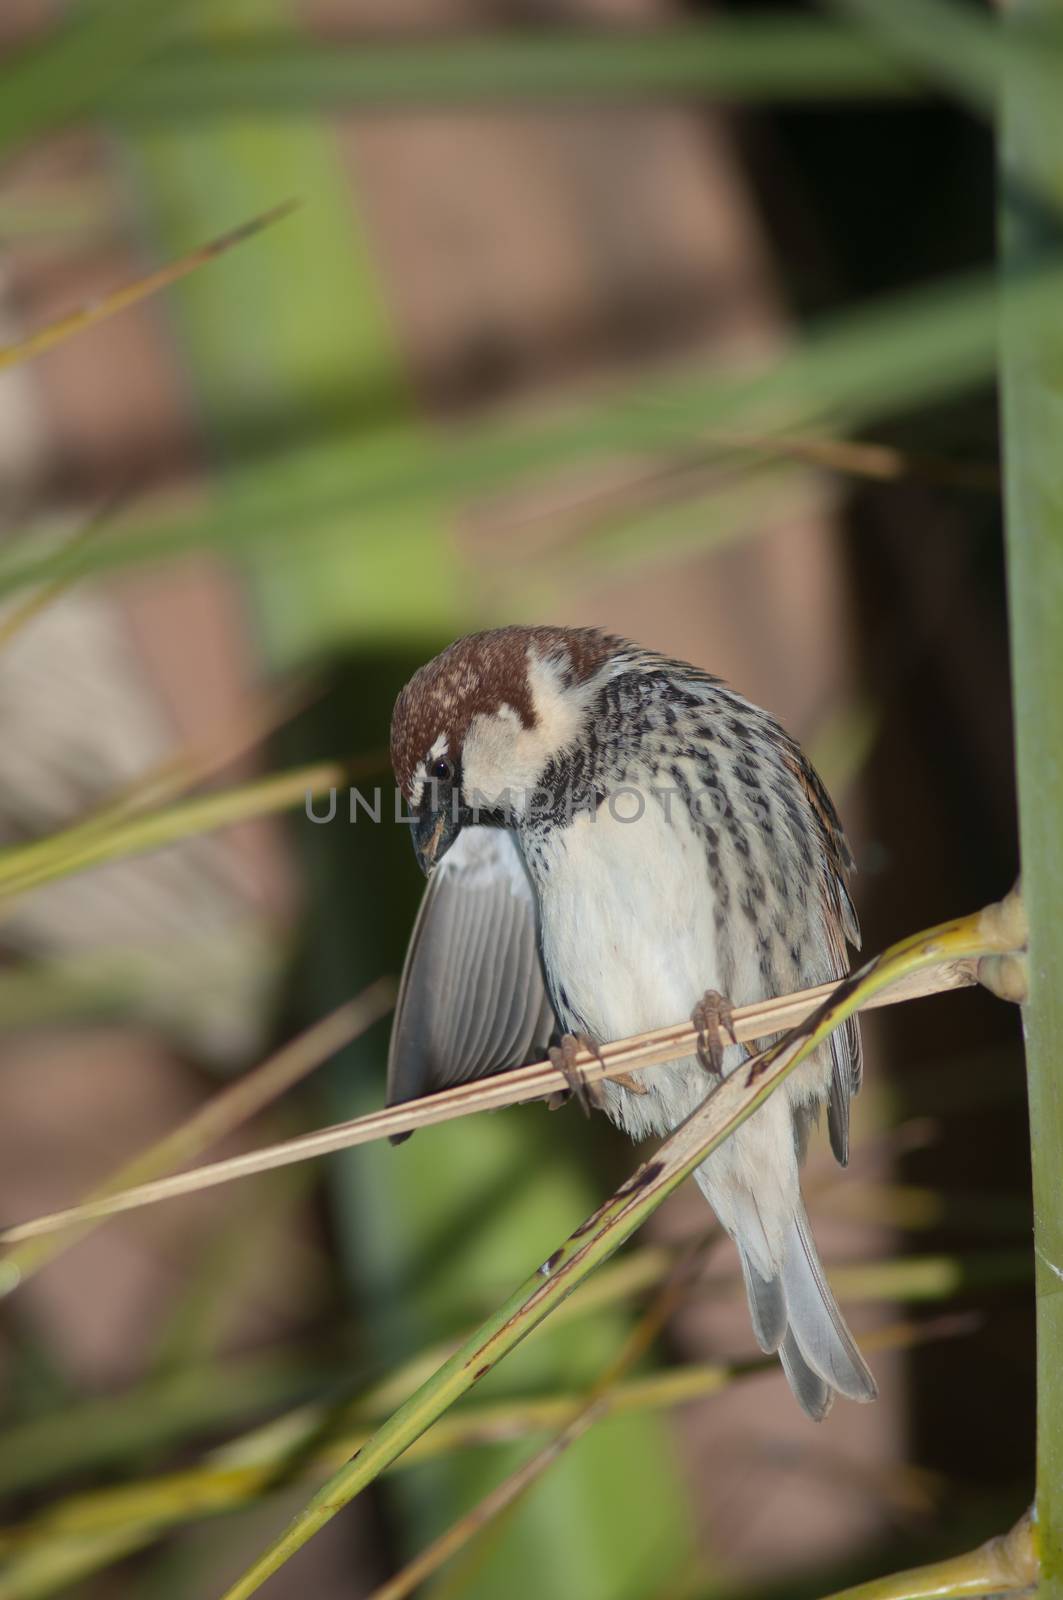 Spanish sparrow. by VictorSuarez